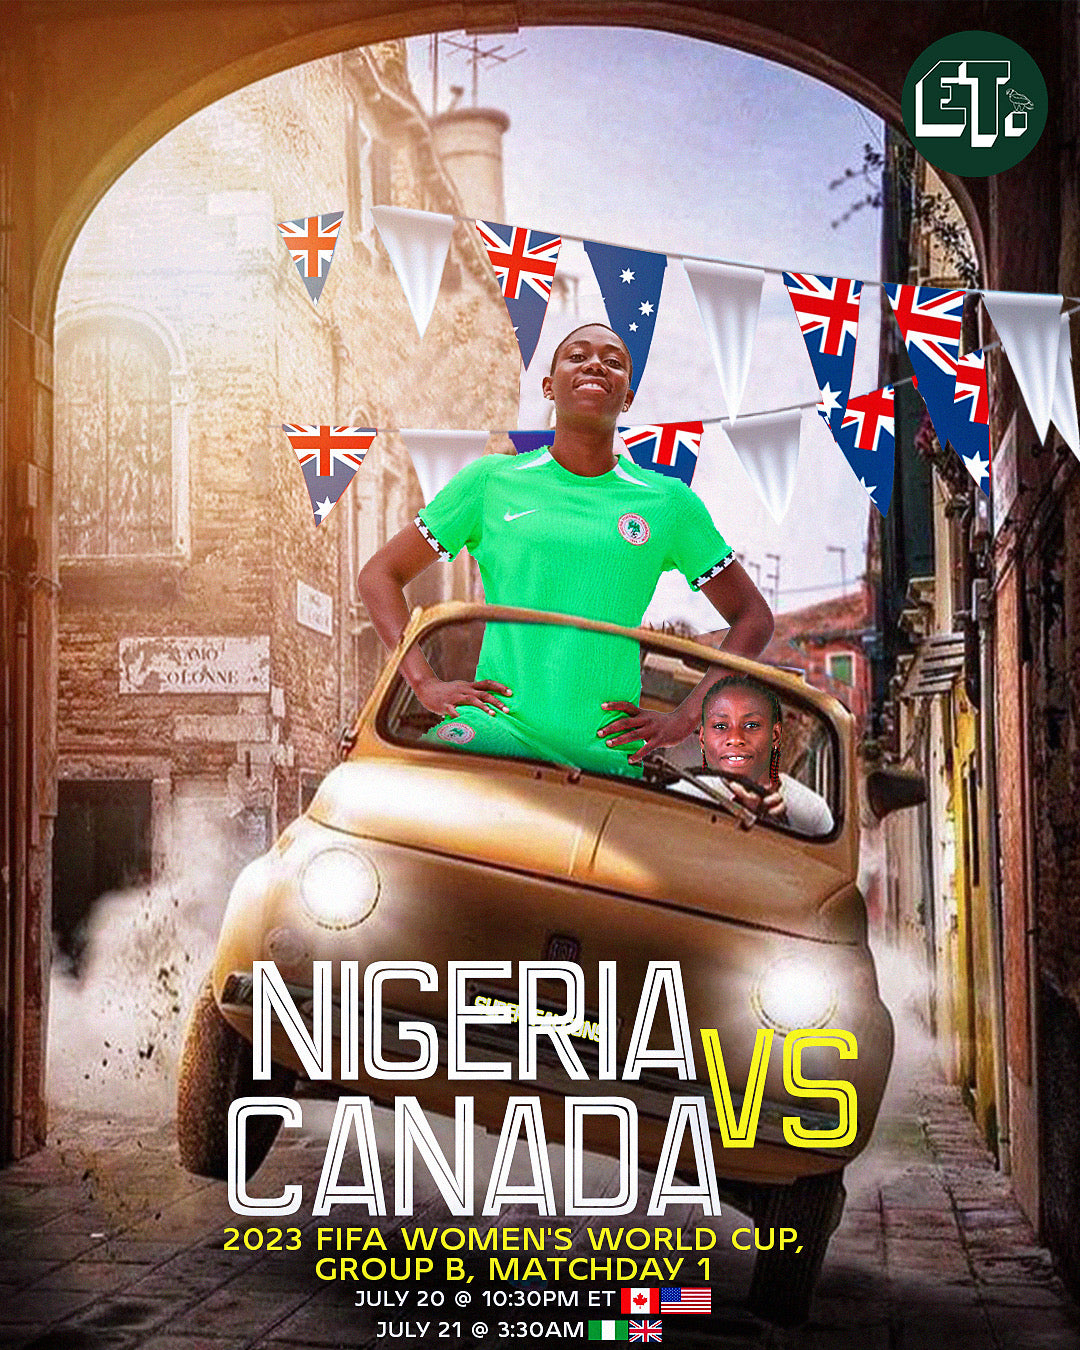 FIFA Women's World Cup 2023 - Match Preview: Nigeria vs Canada